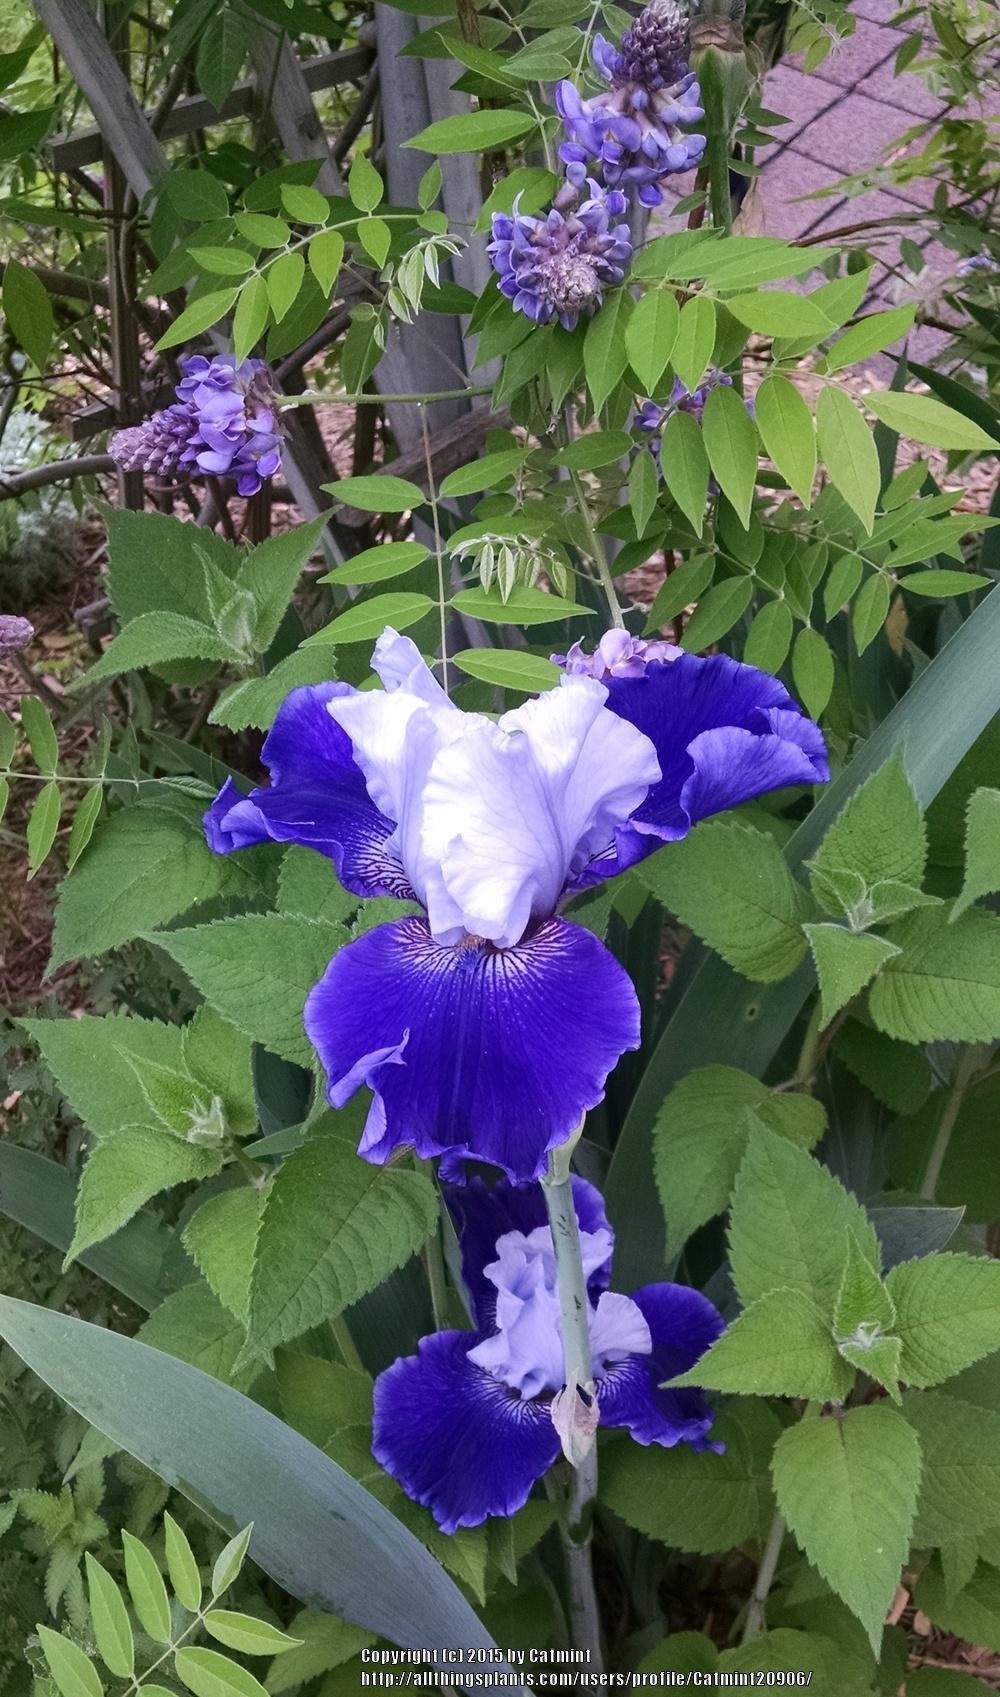 Photo of Tall Bearded Iris (Iris 'World Premier') uploaded by Catmint20906